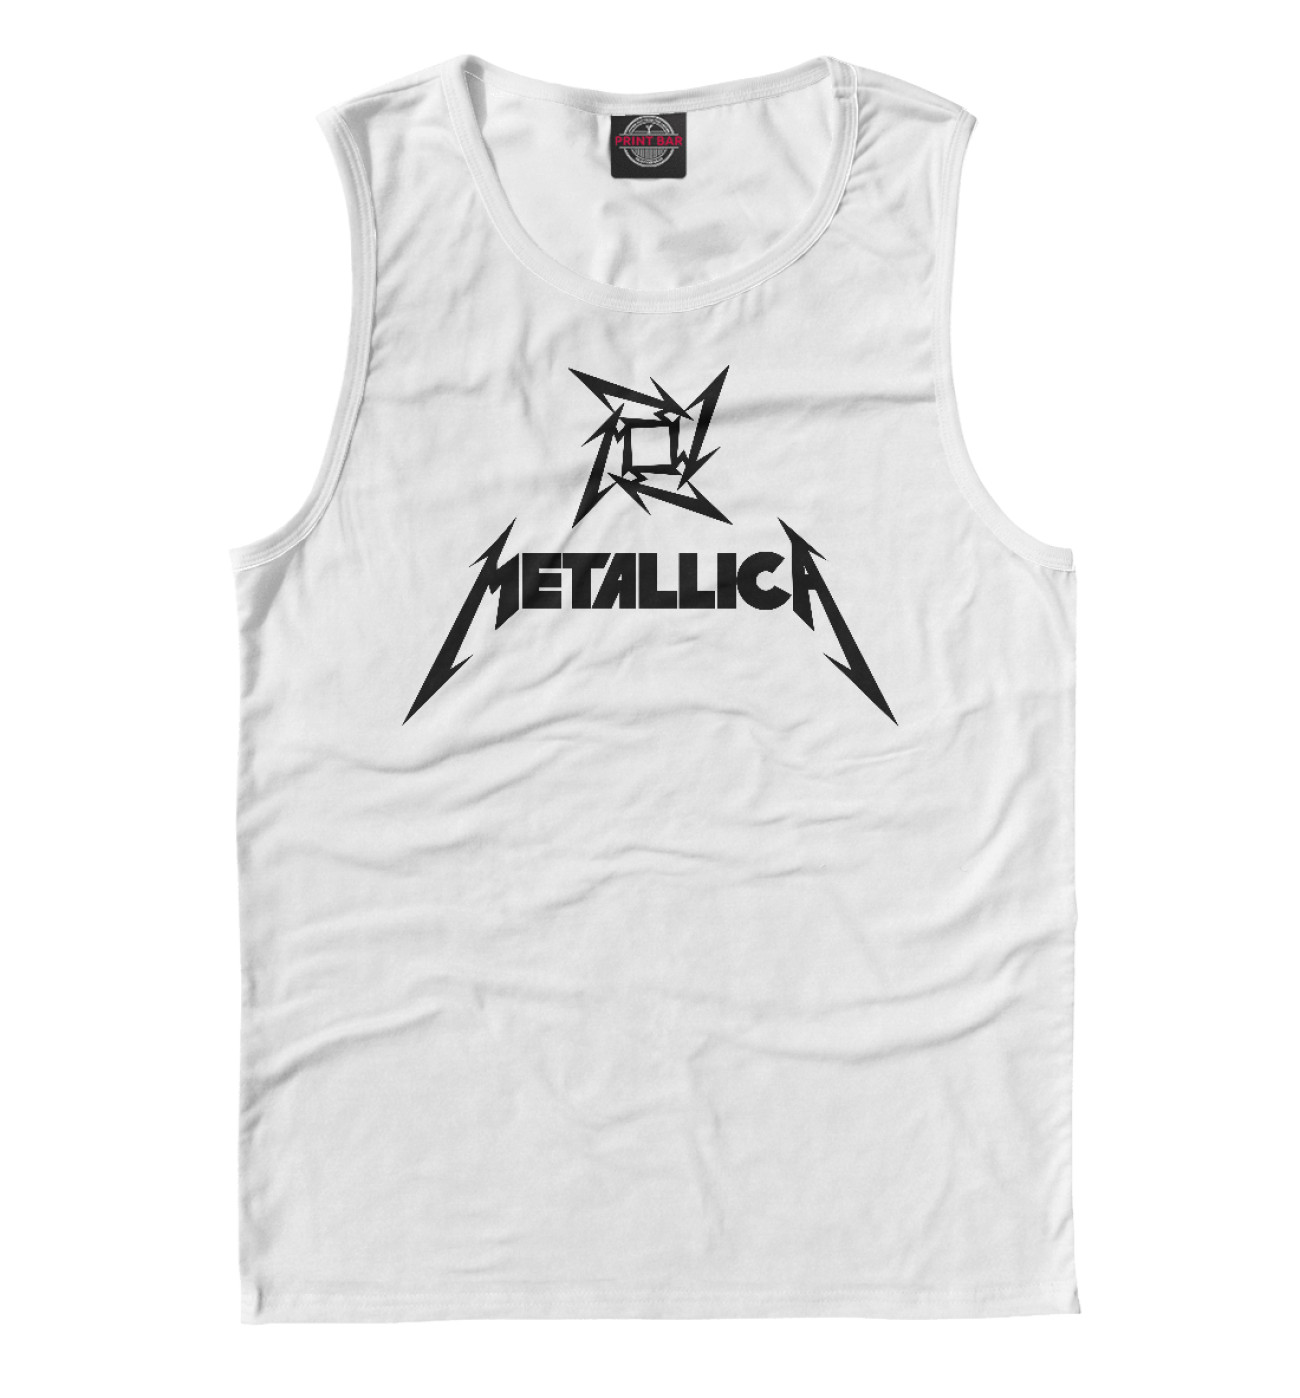 Мужская Майка Metallica, артикул: MET-323843-may-2